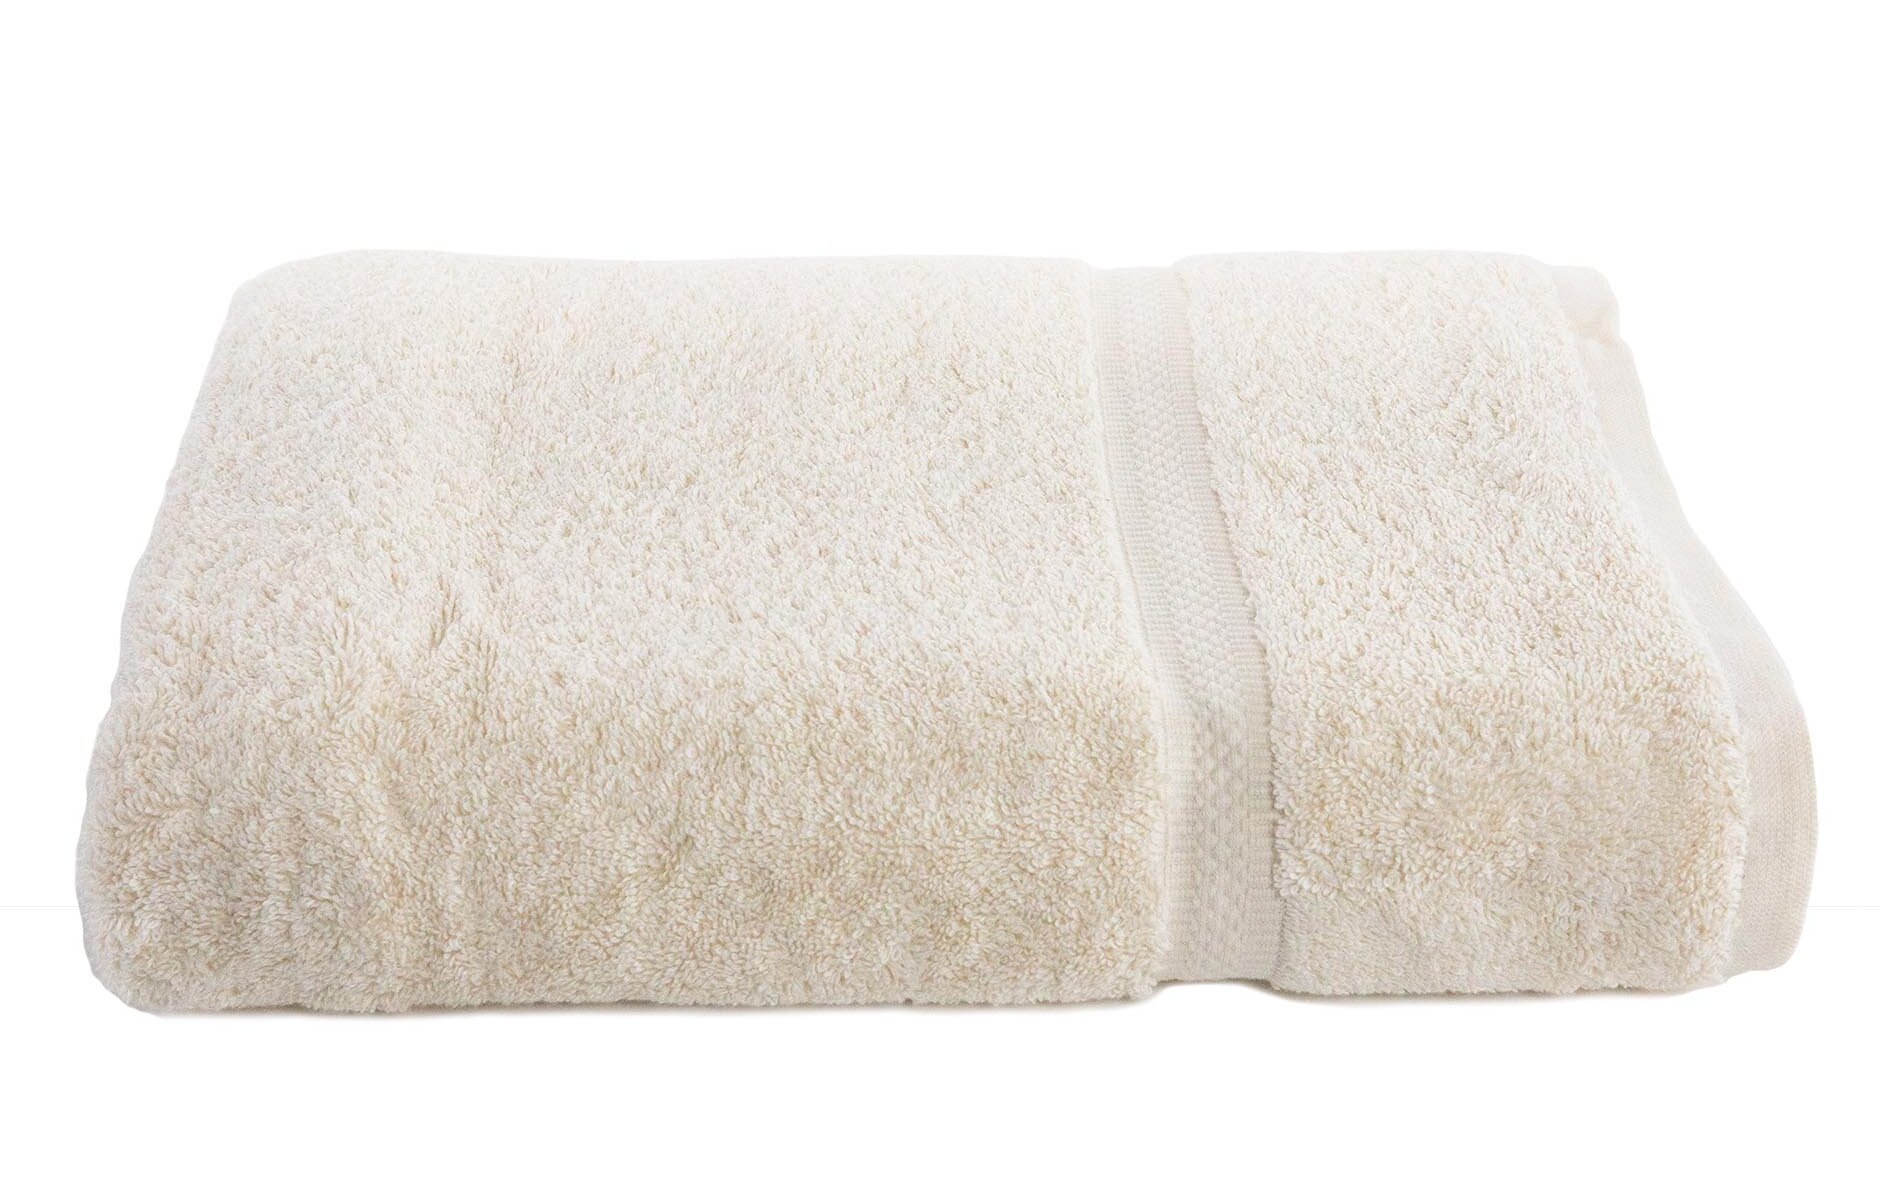 Martex Health Cotton Blend Bath Towels